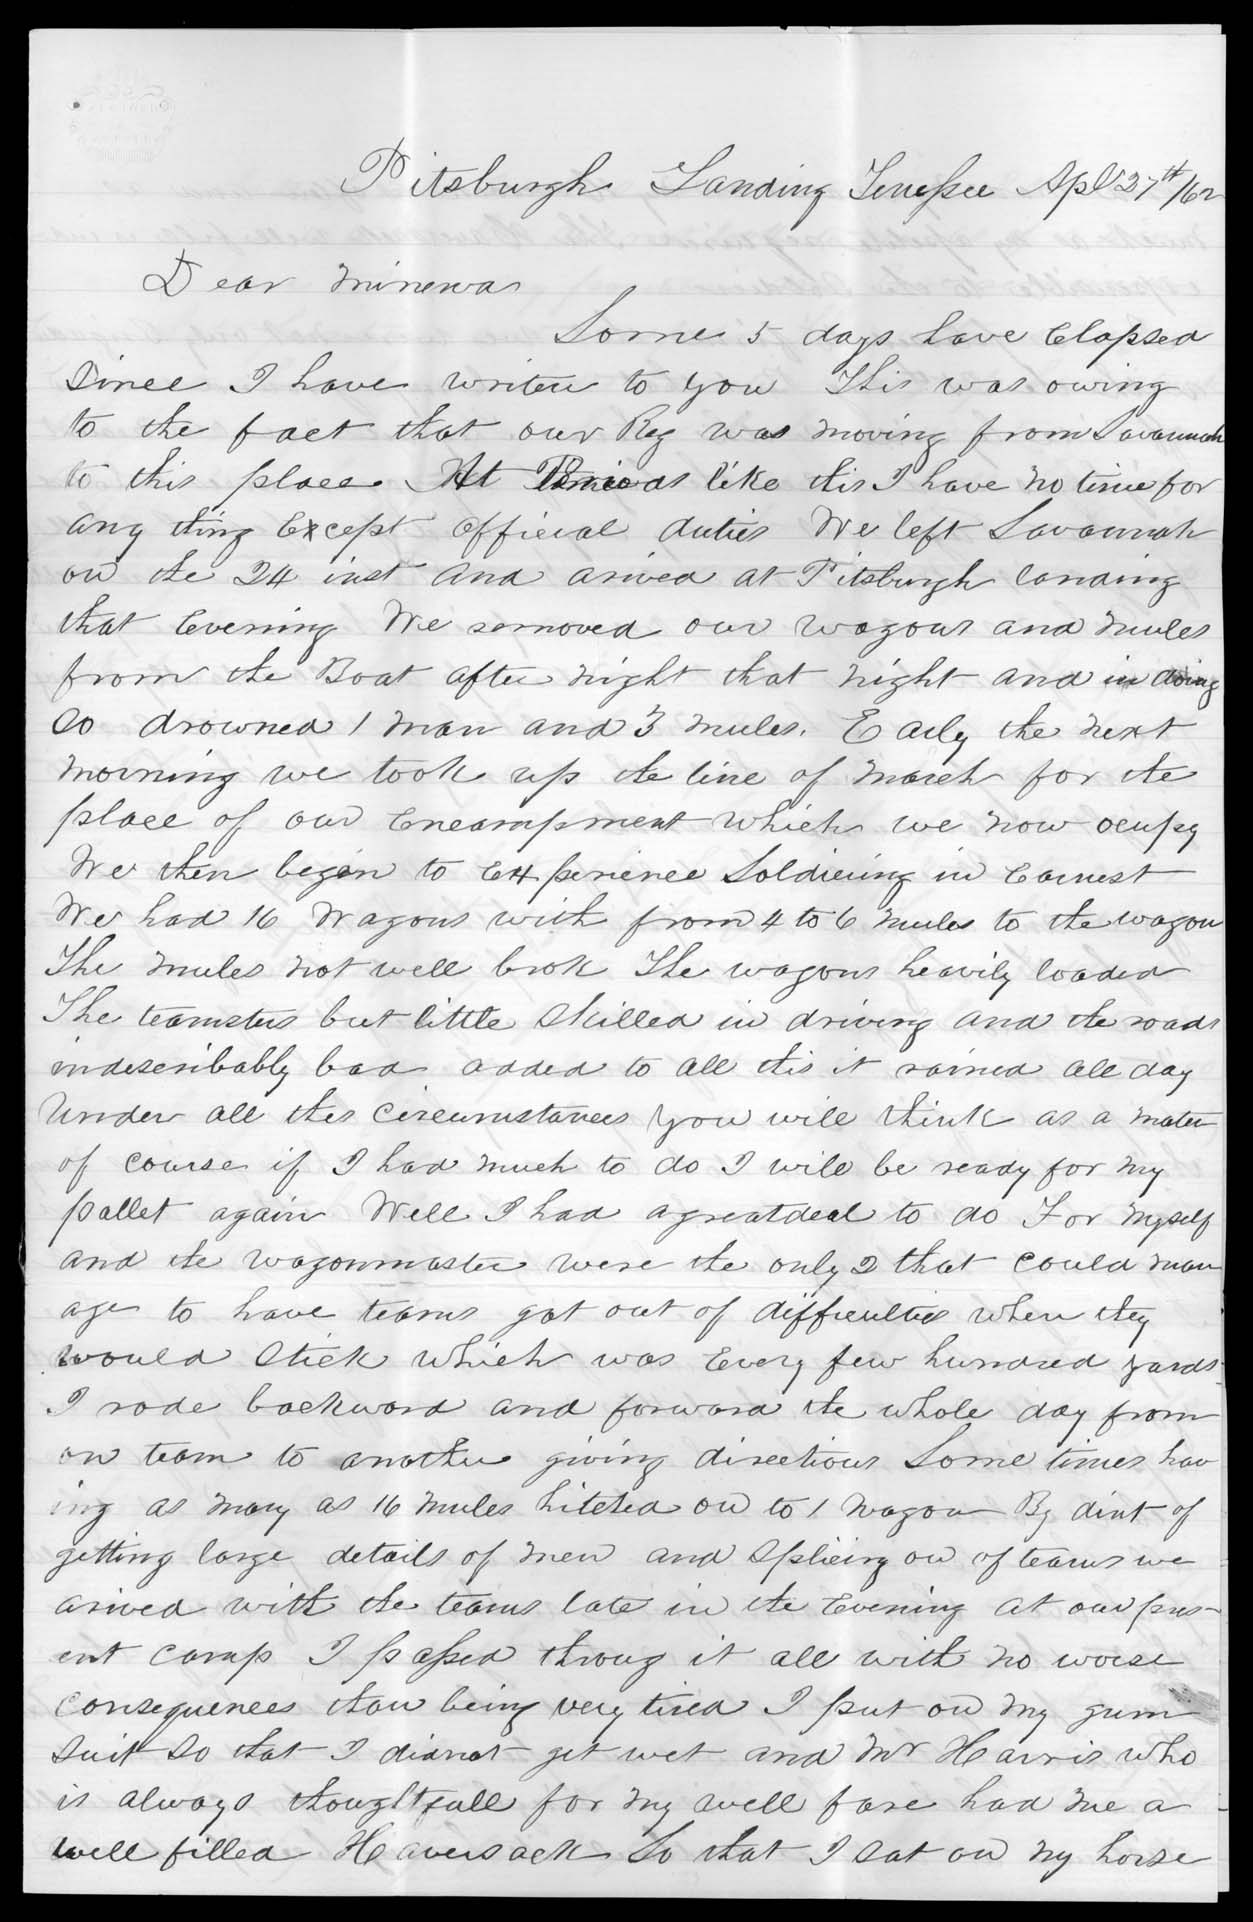 Letter, George thomas, Pittsburg Landing, Tennessee, to Minerva Thomas